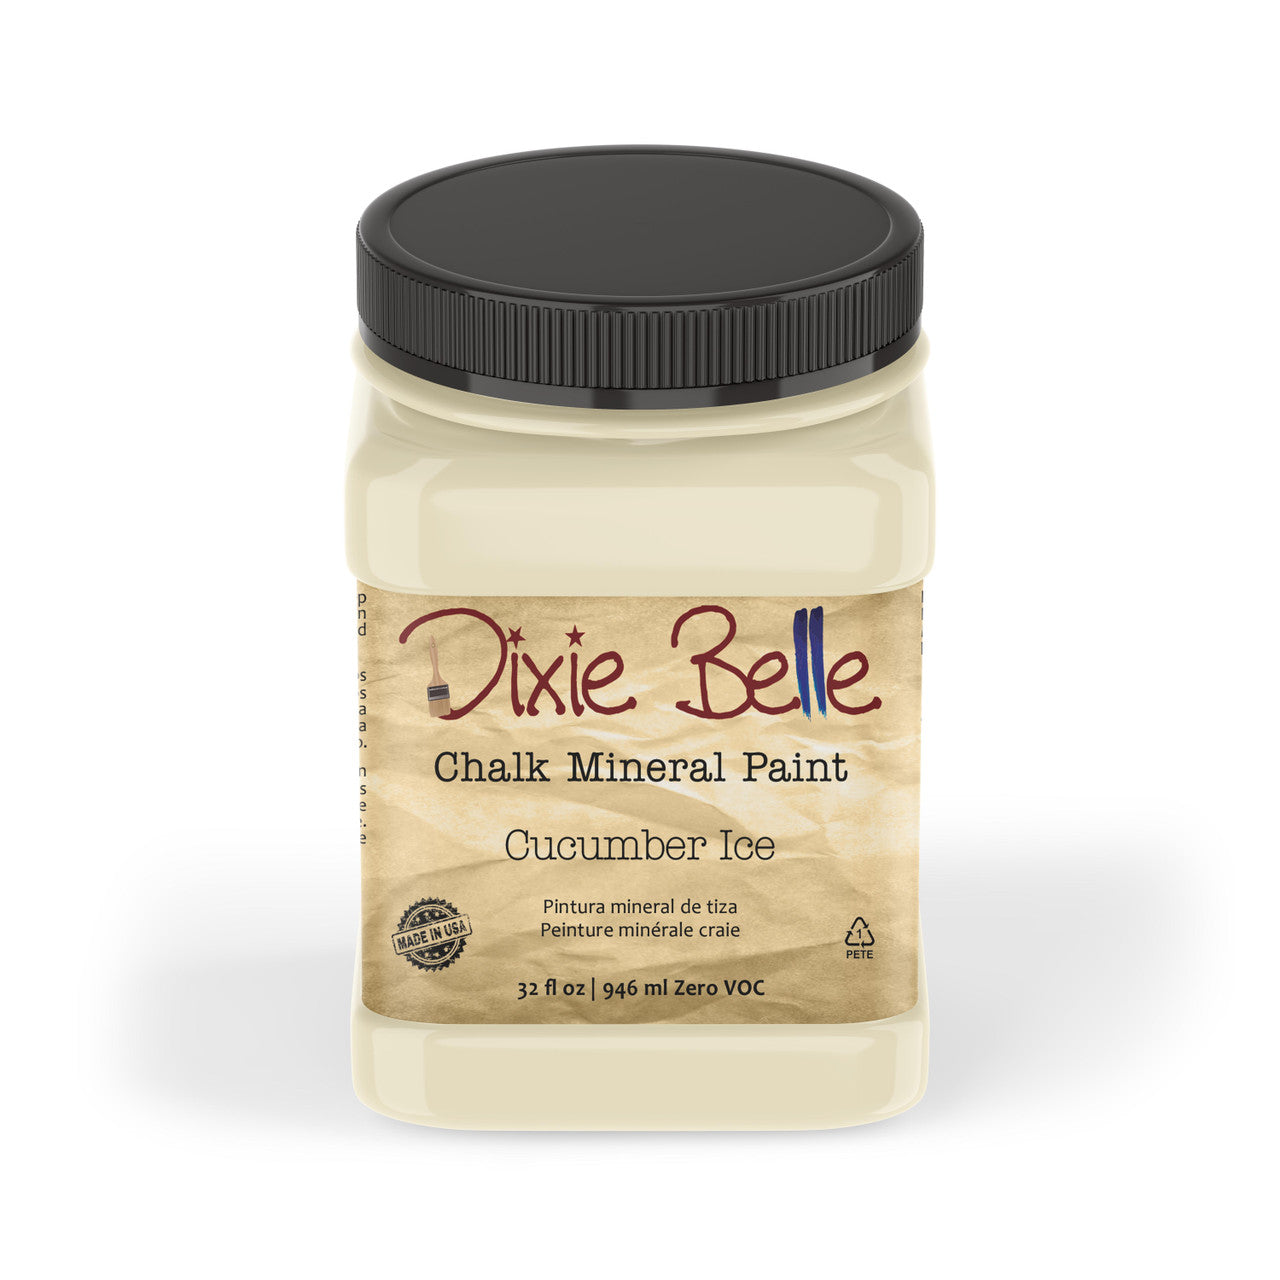 CUCUMBER ICE - Dixie Belle - Matt Black Chalk Mineral Paint - 118ml/4oz - 236ml/8oz - 473ml/16oz - 946ml/32oz